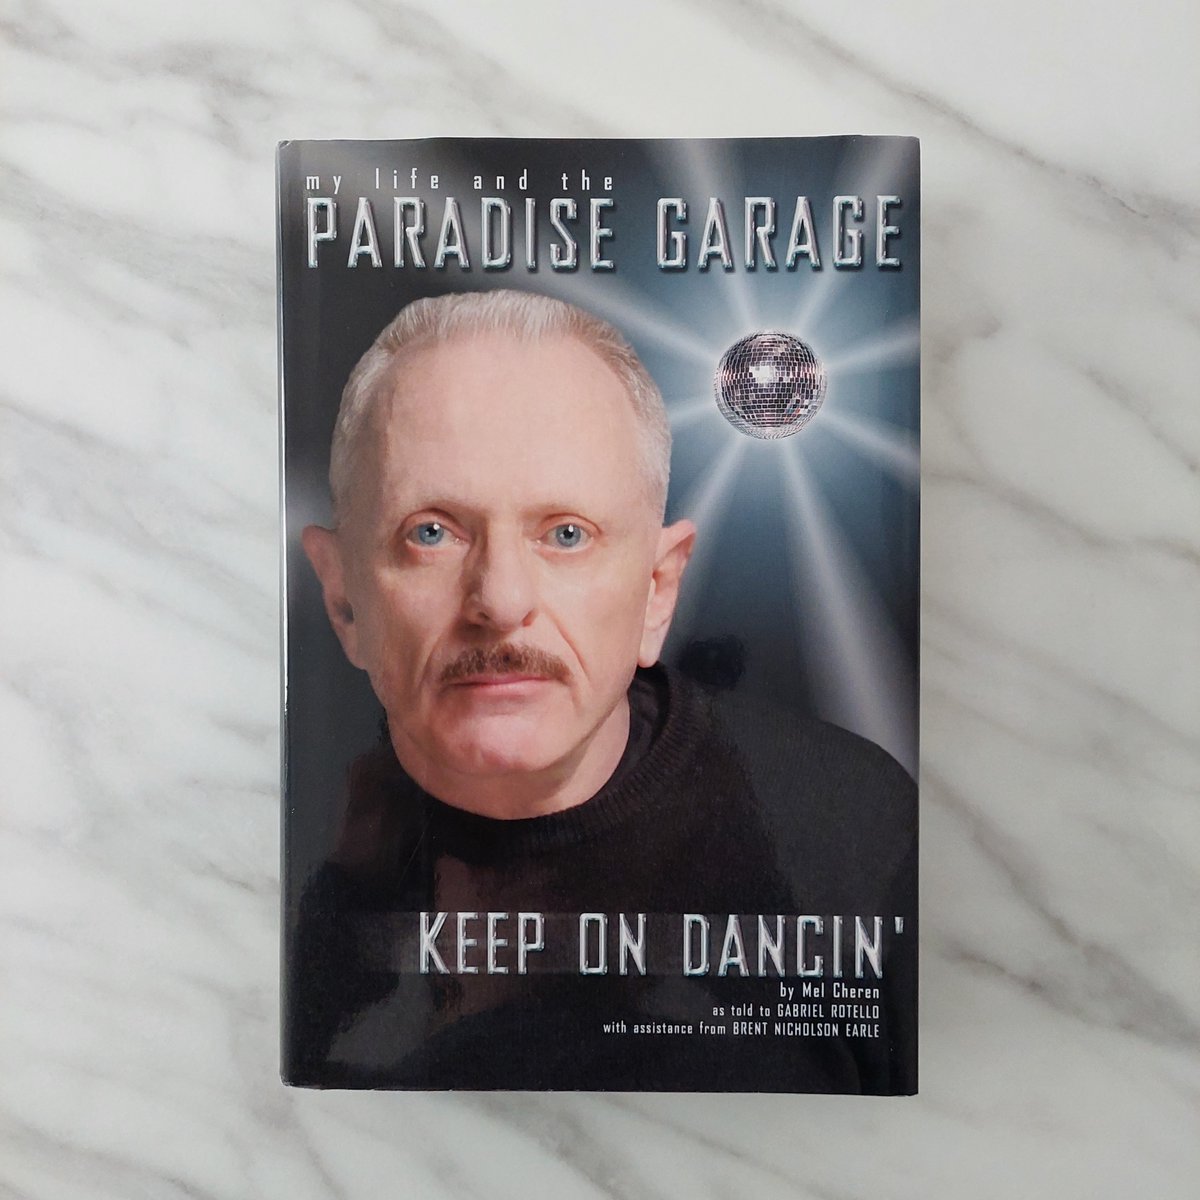 My Life and The Paradise Garage: Keep on Dancin’ by Mel Cheren. ebay.com/itm/1157675566… #ebay #booksforsale #paradisegarage #larrylevan #club #disco #music #dance #dj #newyork #gay